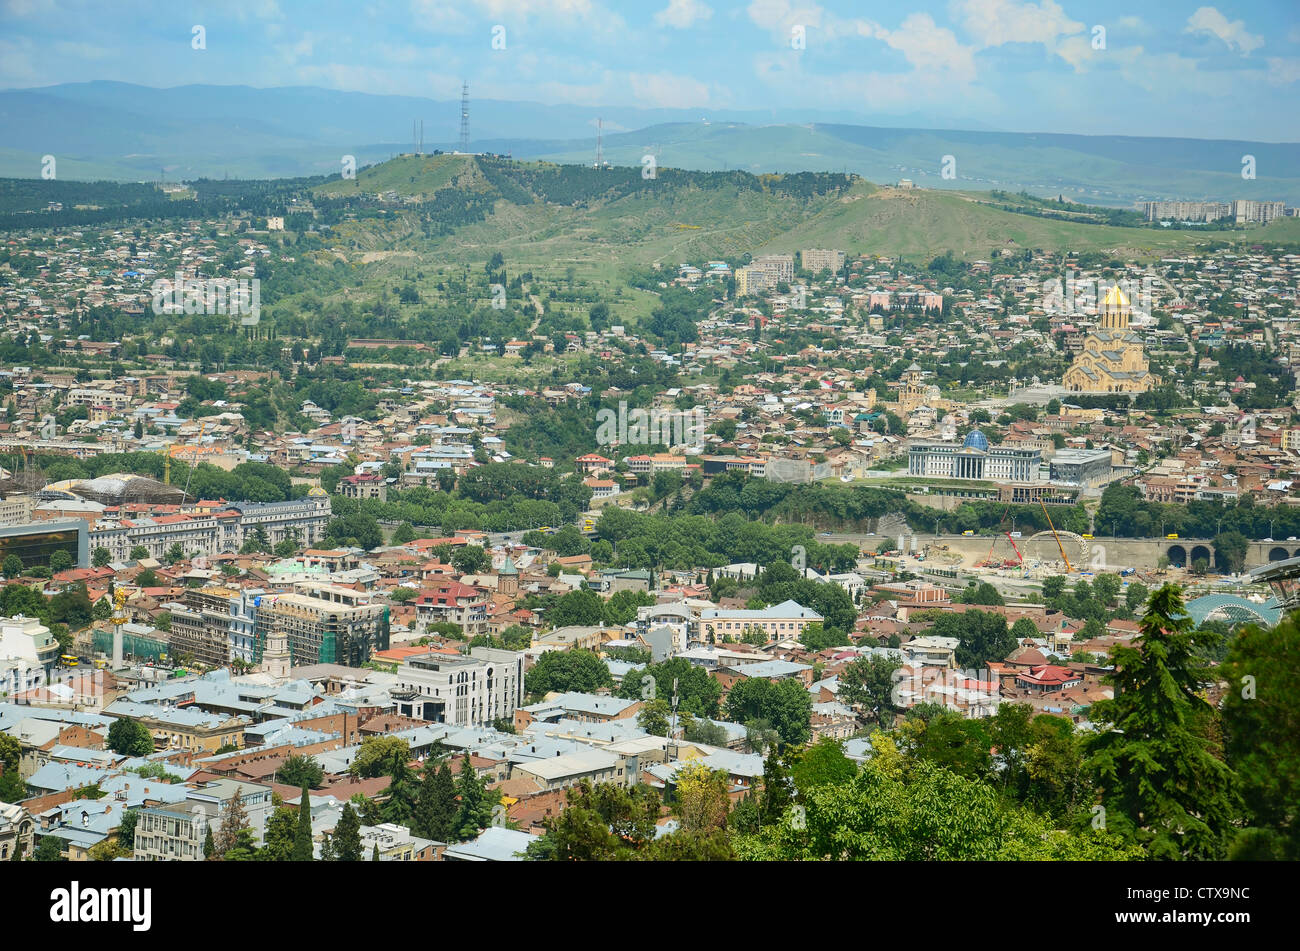 City view of Tbilisi - capital of Georgian republic Stock Photo